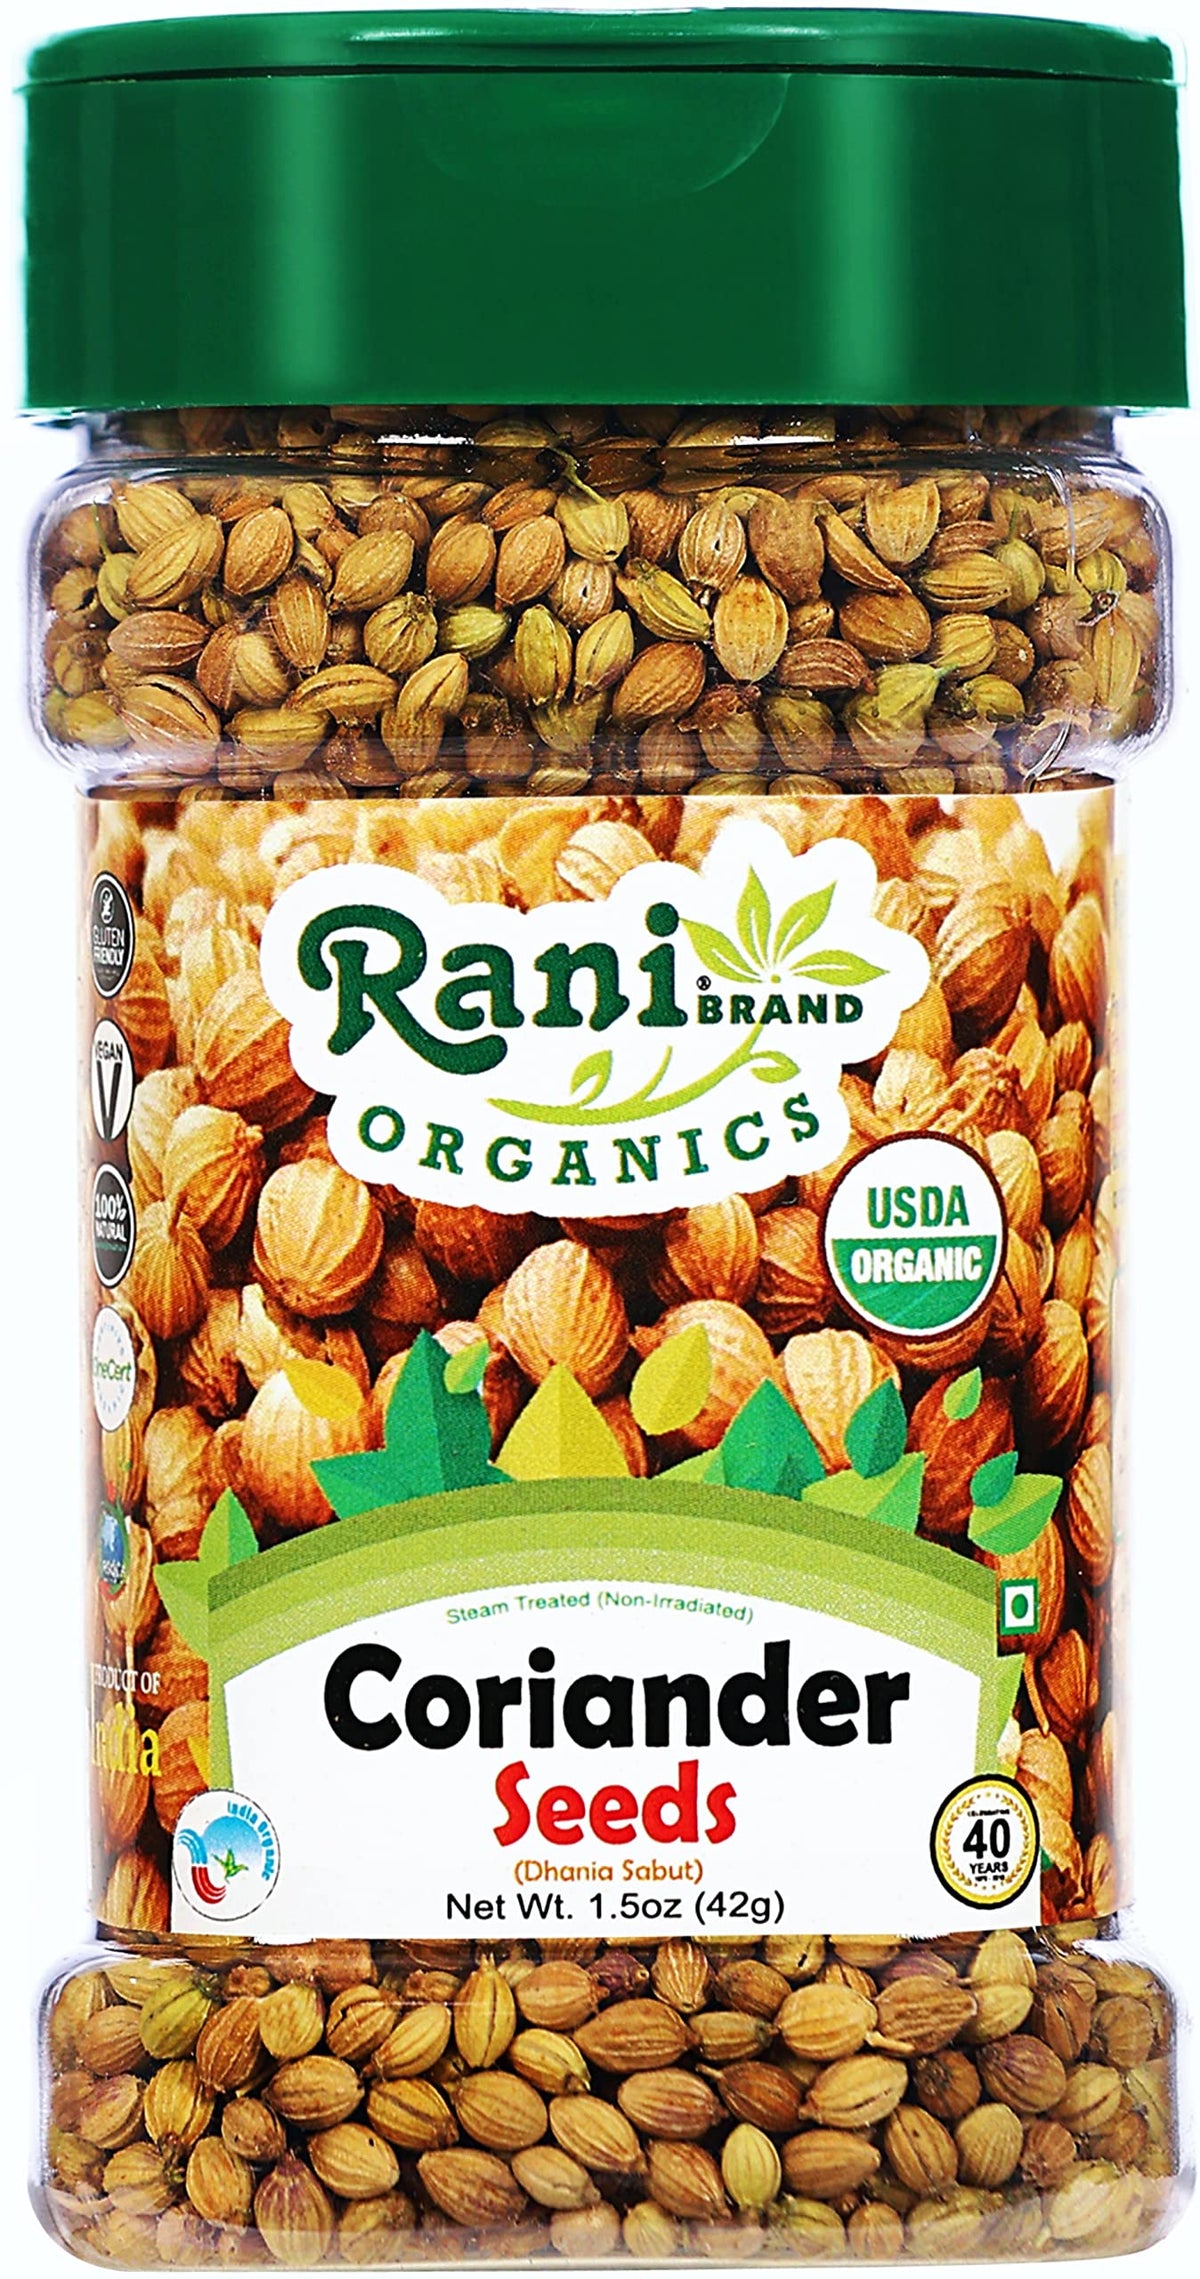 Rani Organic Coriander Seeds Whole (Dhania Sabut) 1.5oz (42g) PET